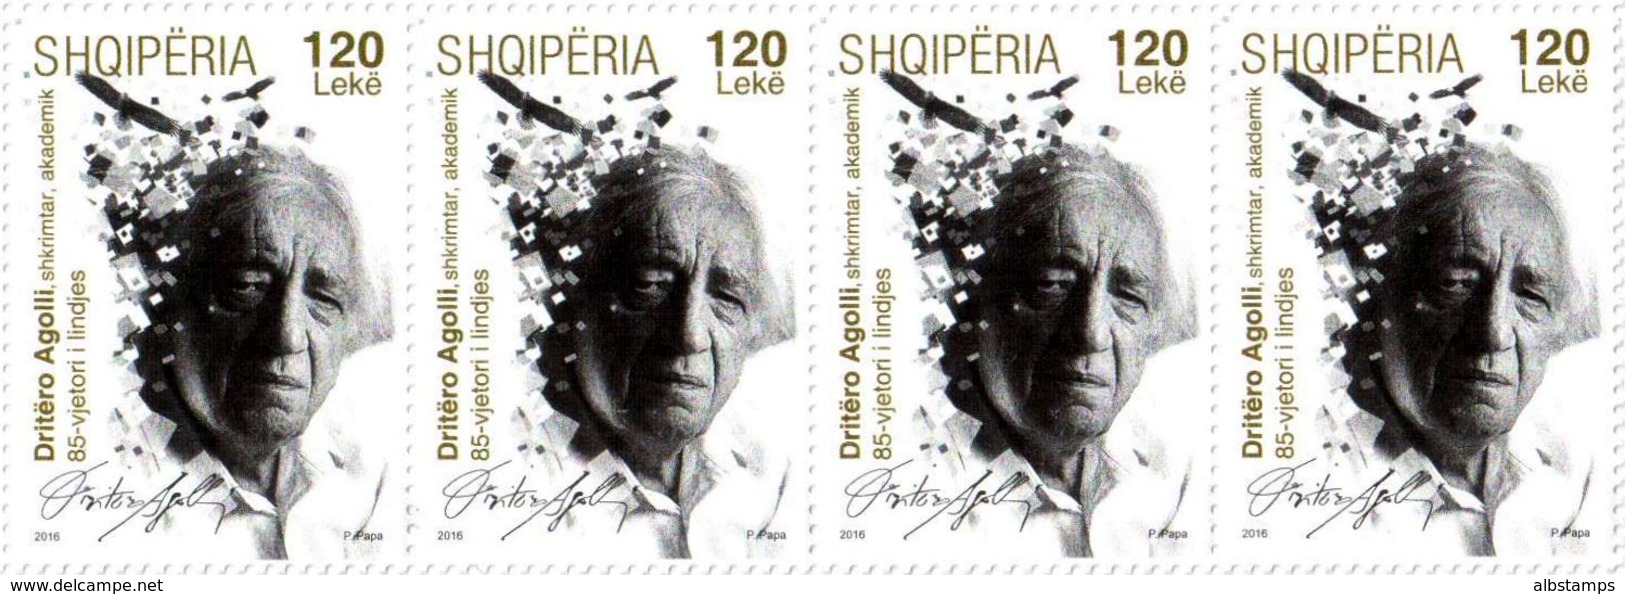 Albania Stamp 2016. Dritero Agolli, Writer, Academician. People On Stamps. Strip Of 4 Four. MNH - Albania